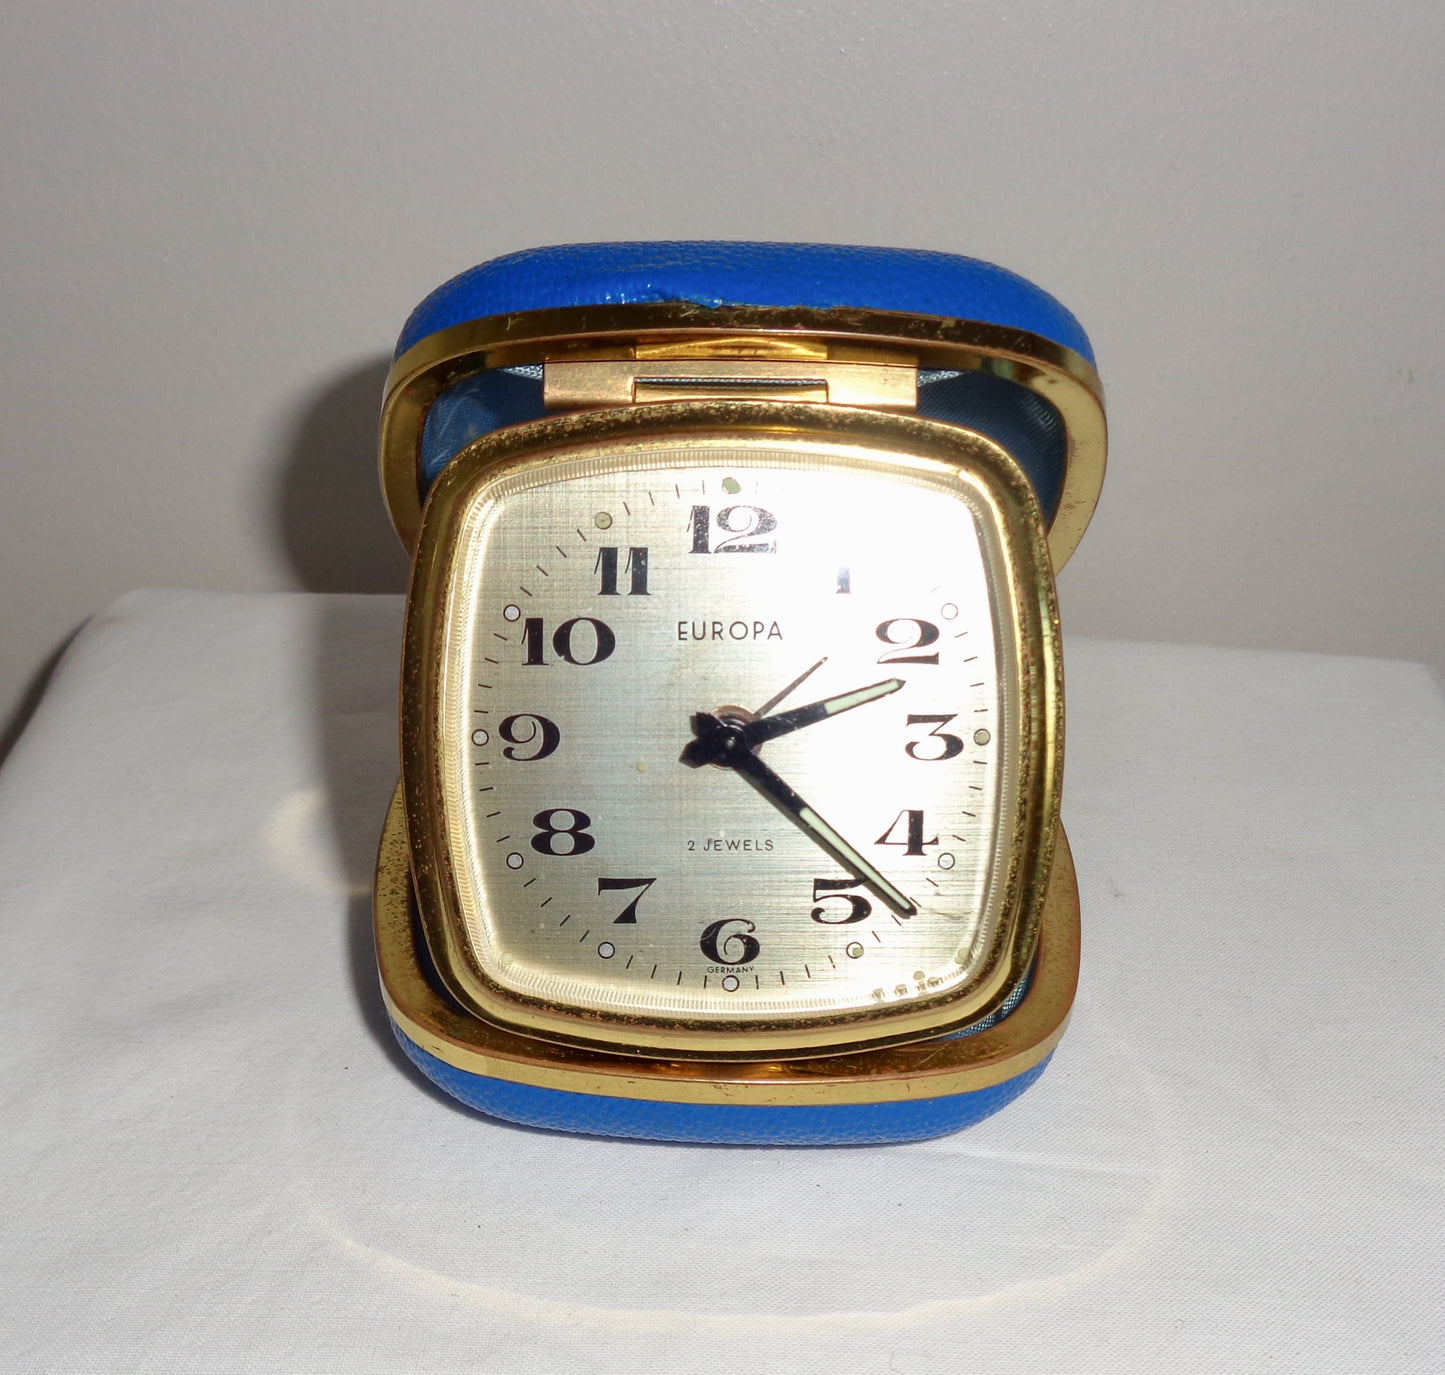 Europa Folding Travel Alarm Clock In Royal Blue